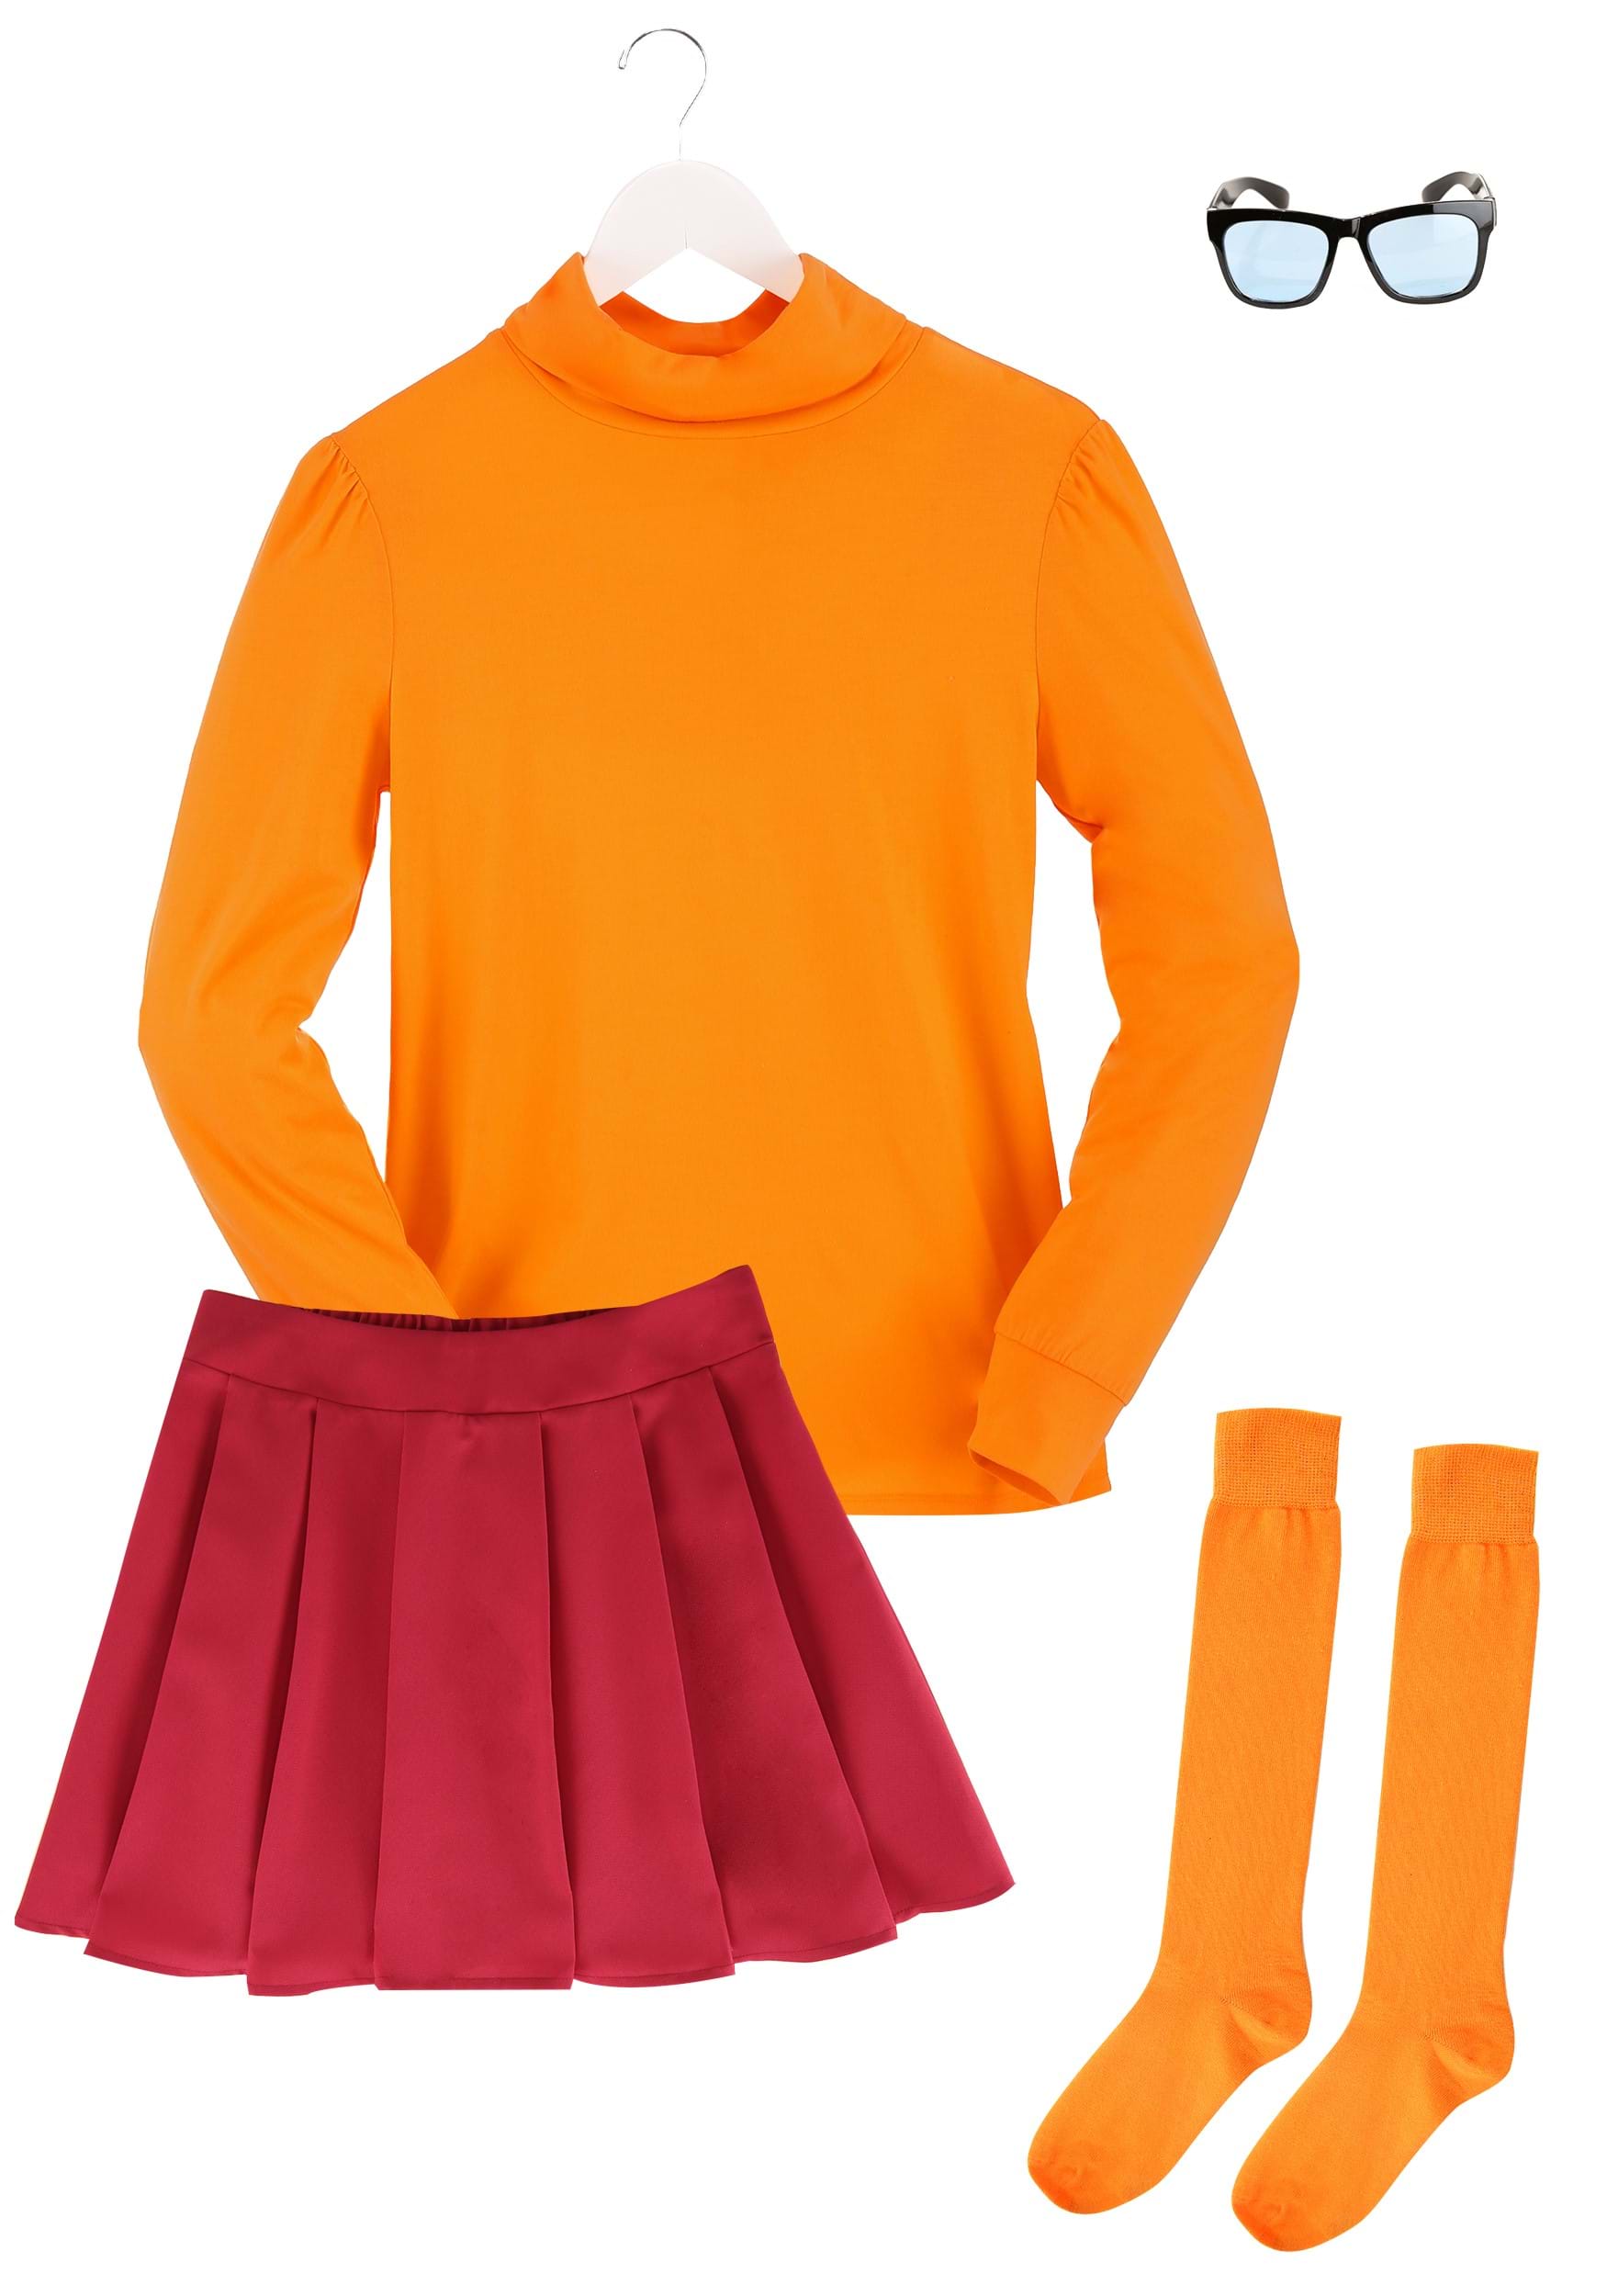 Velma Dinkley (Scooby Doo) Costume for Cosplay & Halloween 2023  Velma  halloween costume, Scooby doo halloween costumes, Scooby doo costumes